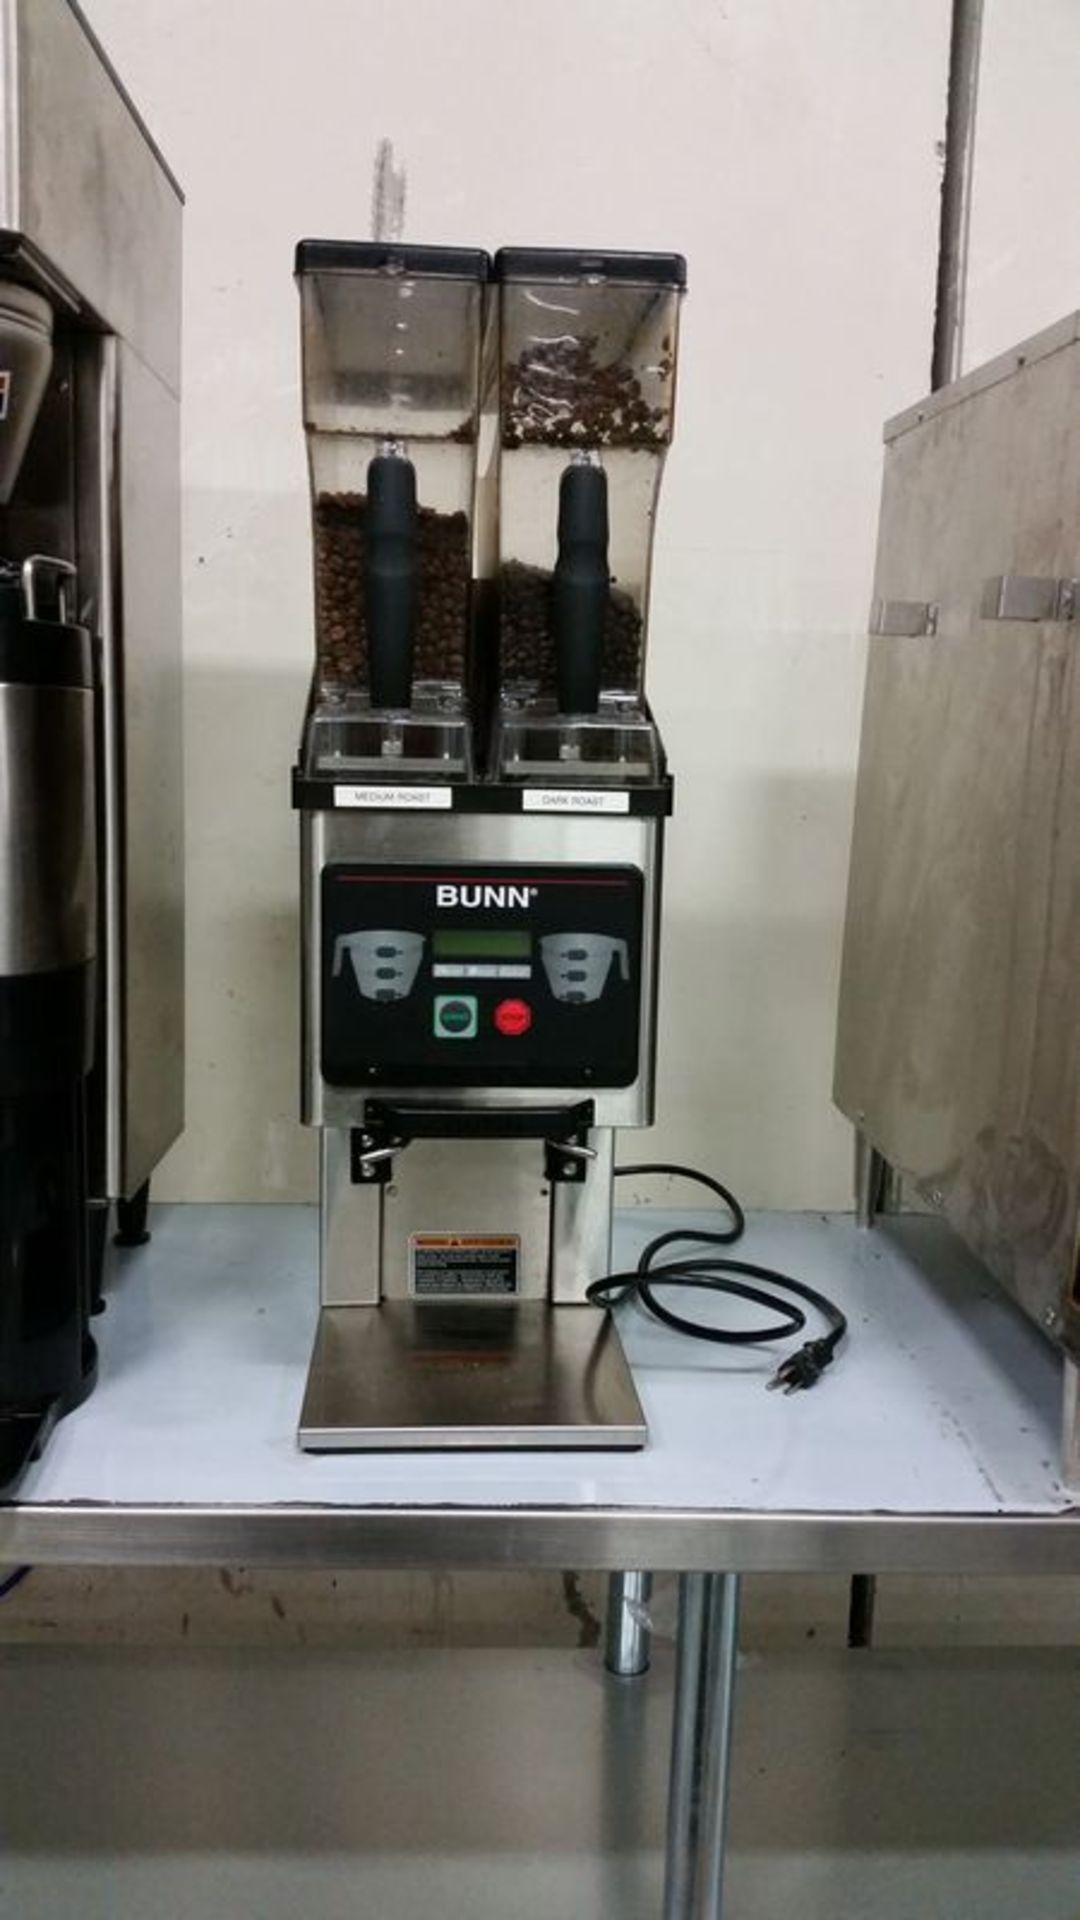 Bunn coffee grinder - New in 2013